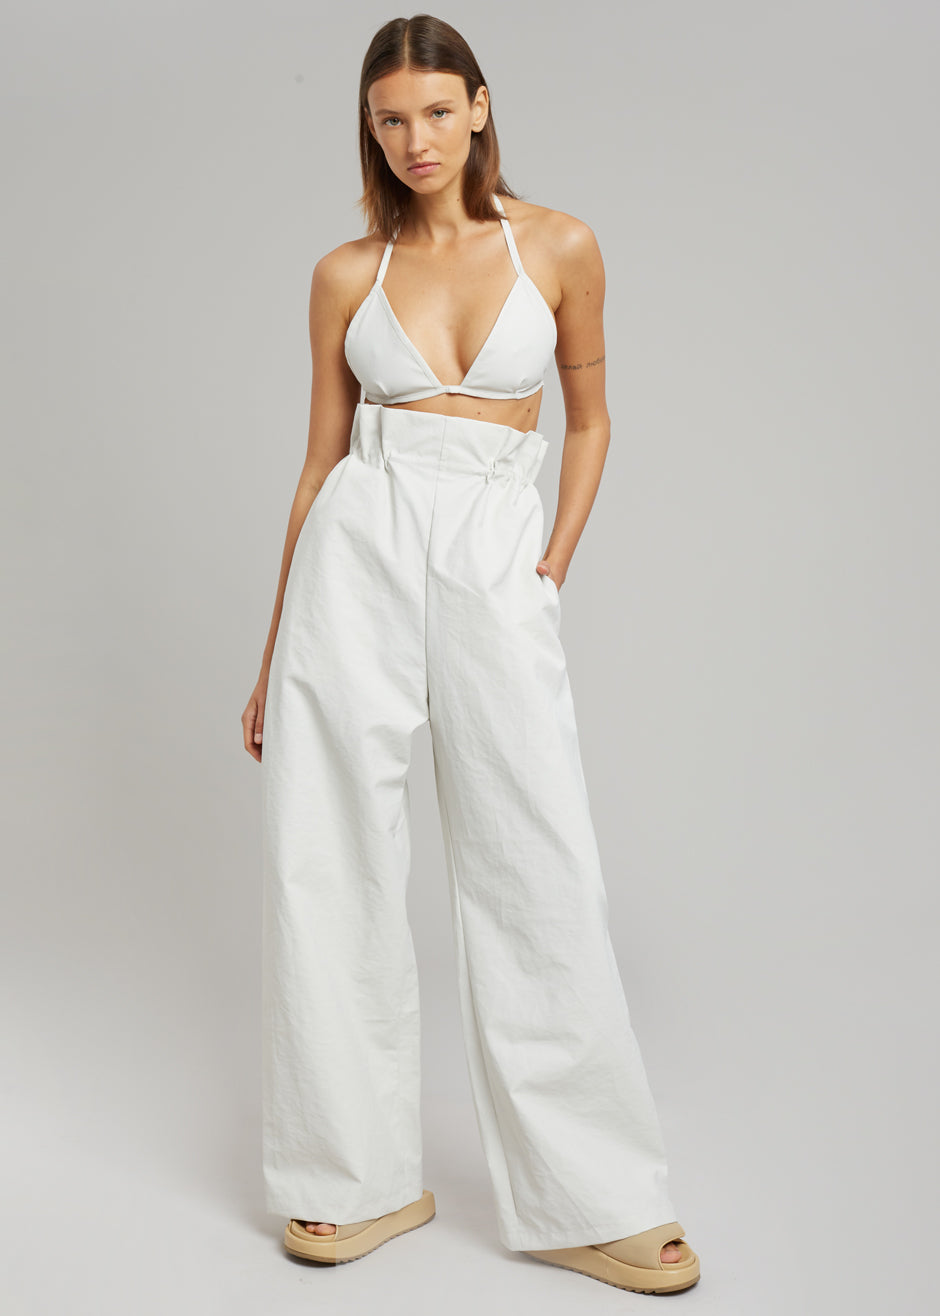 KASSL Edition Coated Bikini Top - White - 6